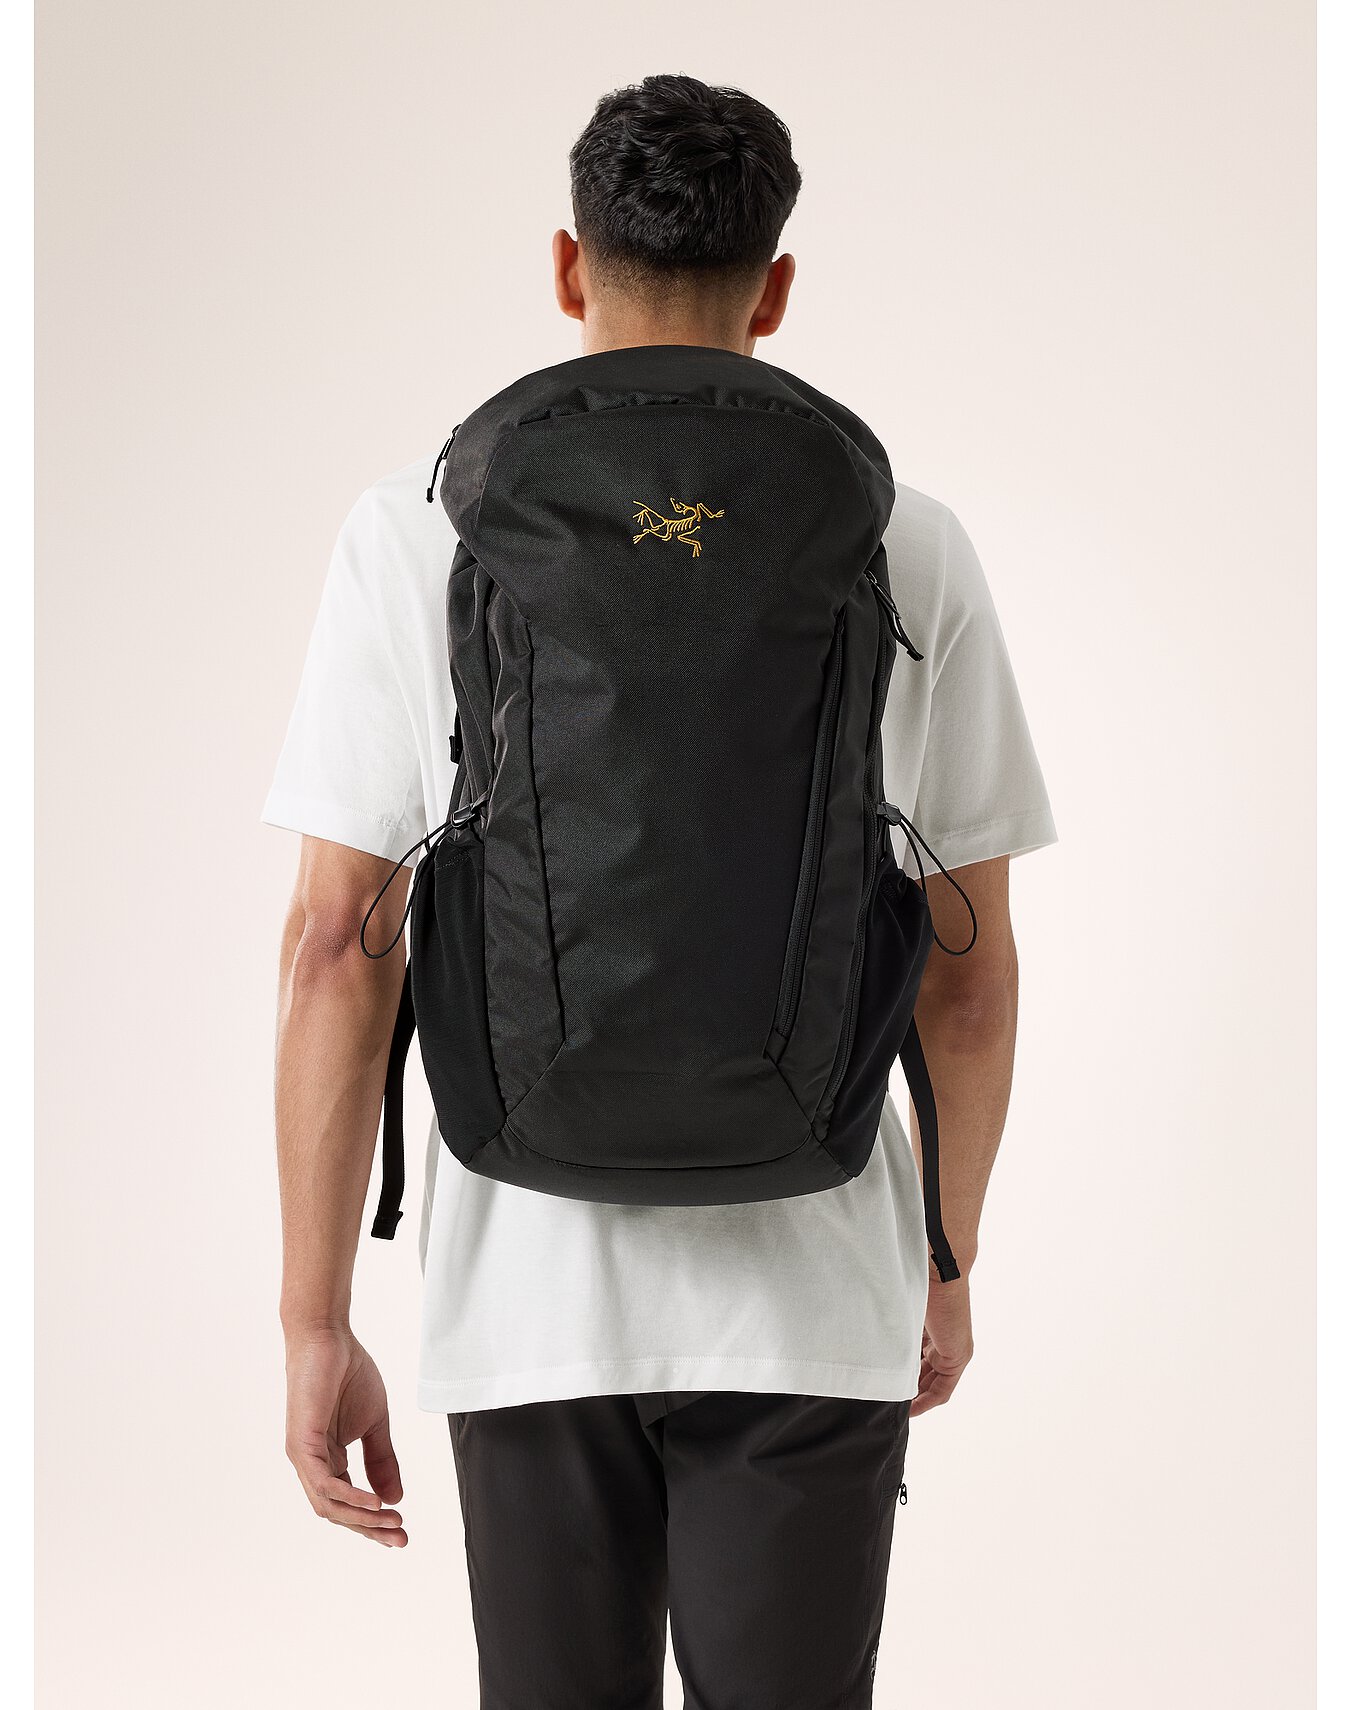 Mantis 30 Backpack | Arc'teryx